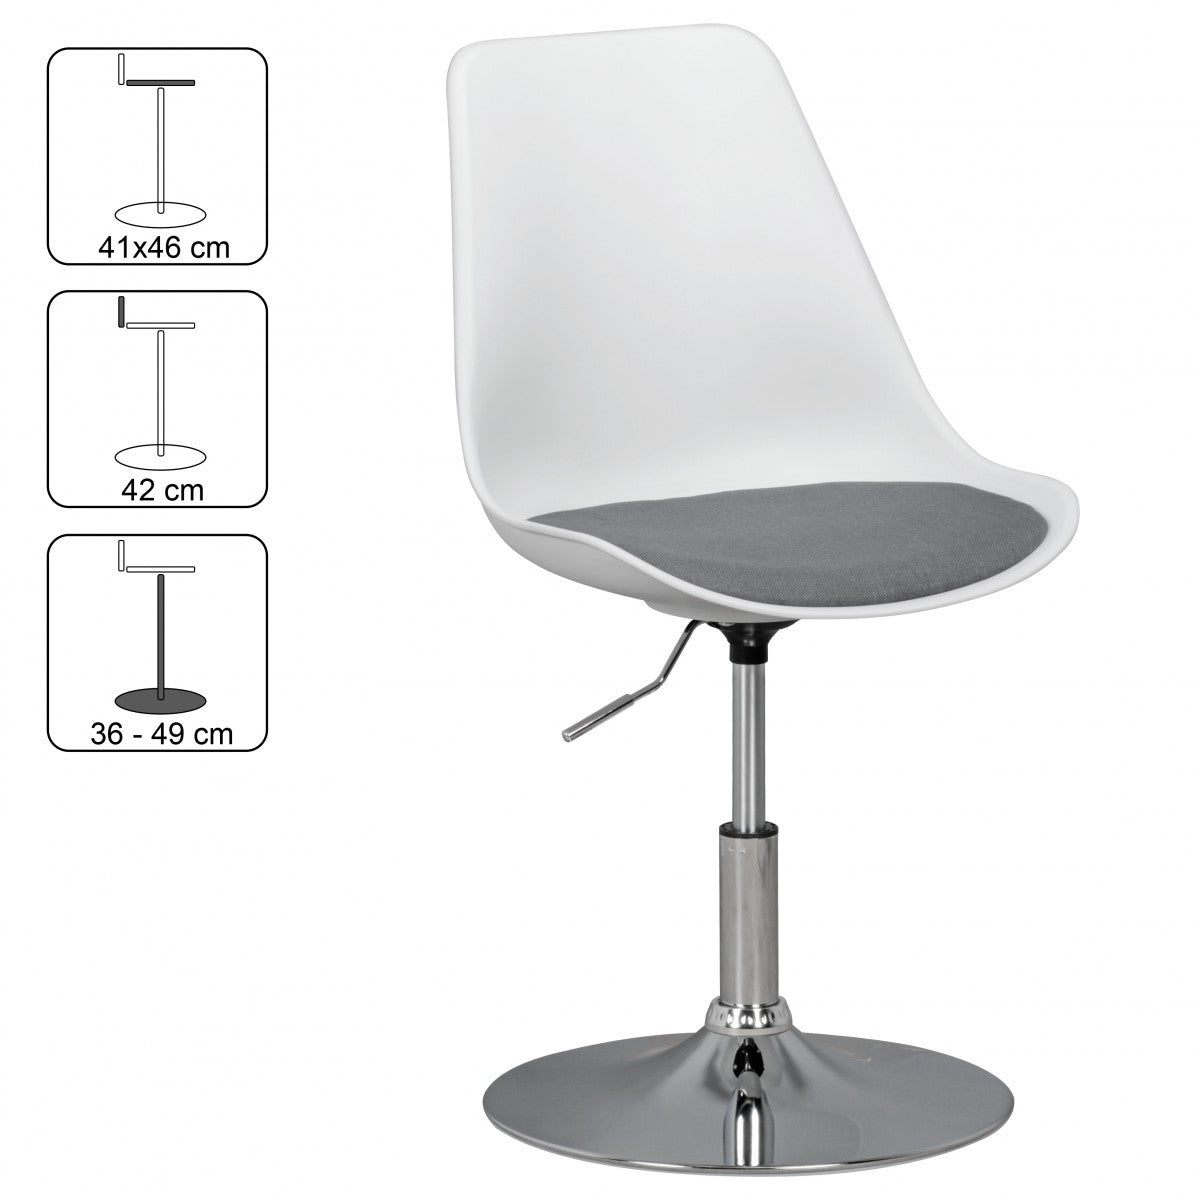 Nancy's Forks Armchair - Swivel armchair - Waiting room chair - Dining room chair - Visitor chair - Swivel chair - Fabric - White